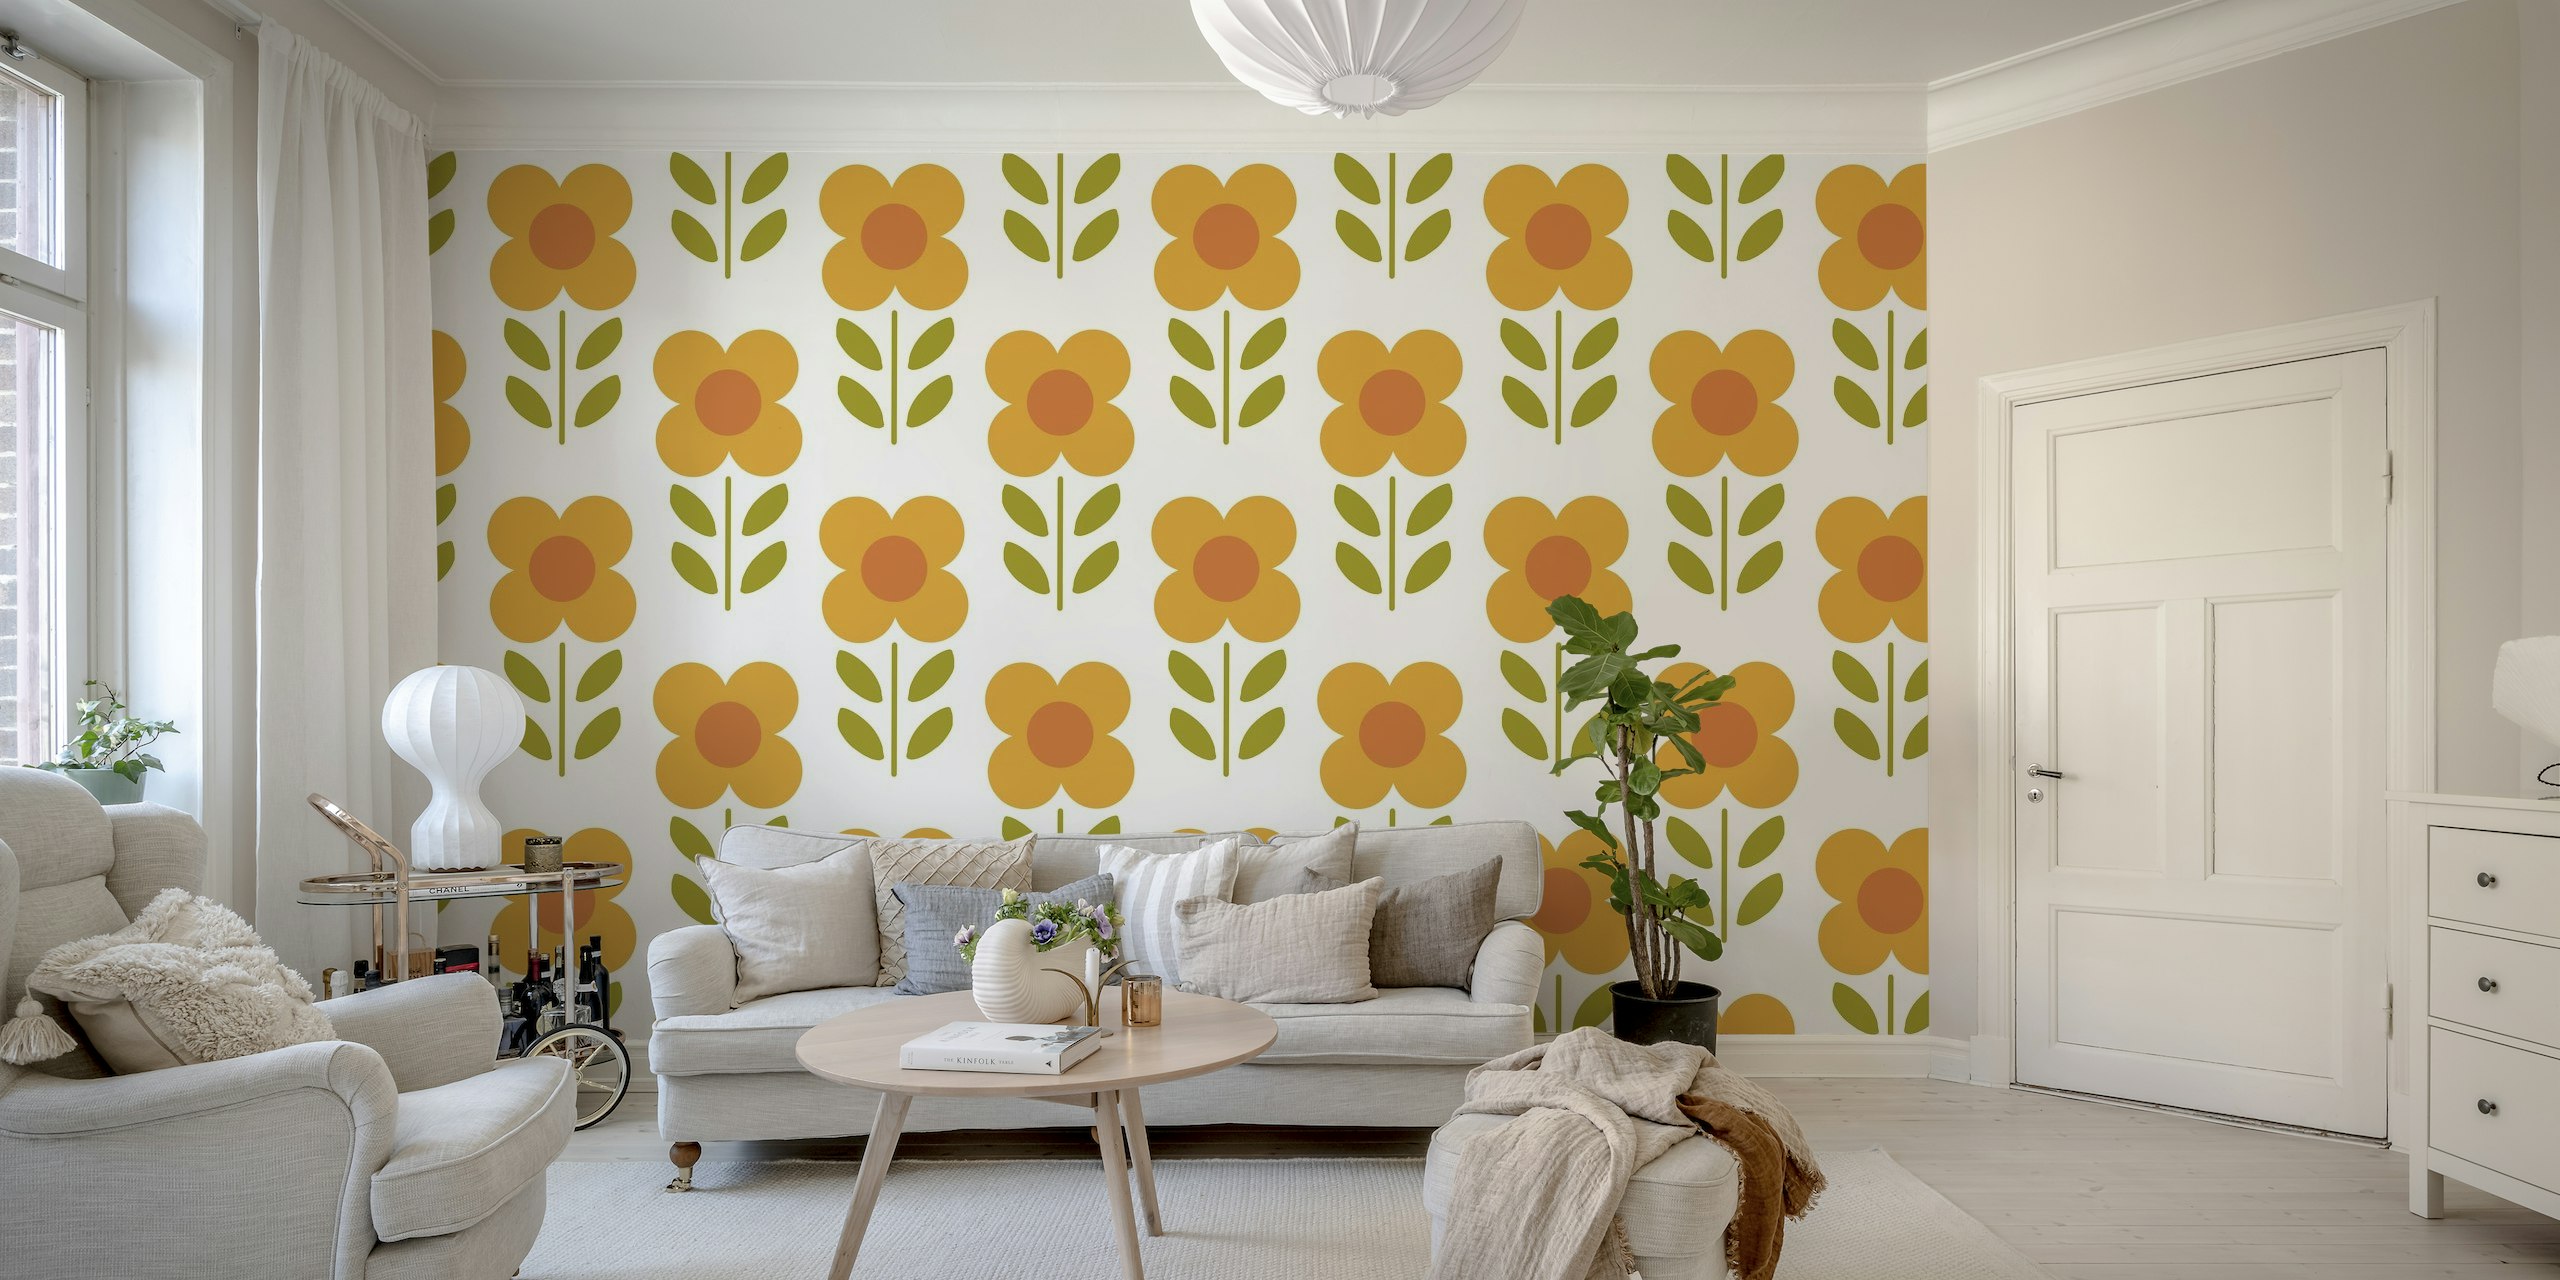 Geometric Retro Daisy wallpaper